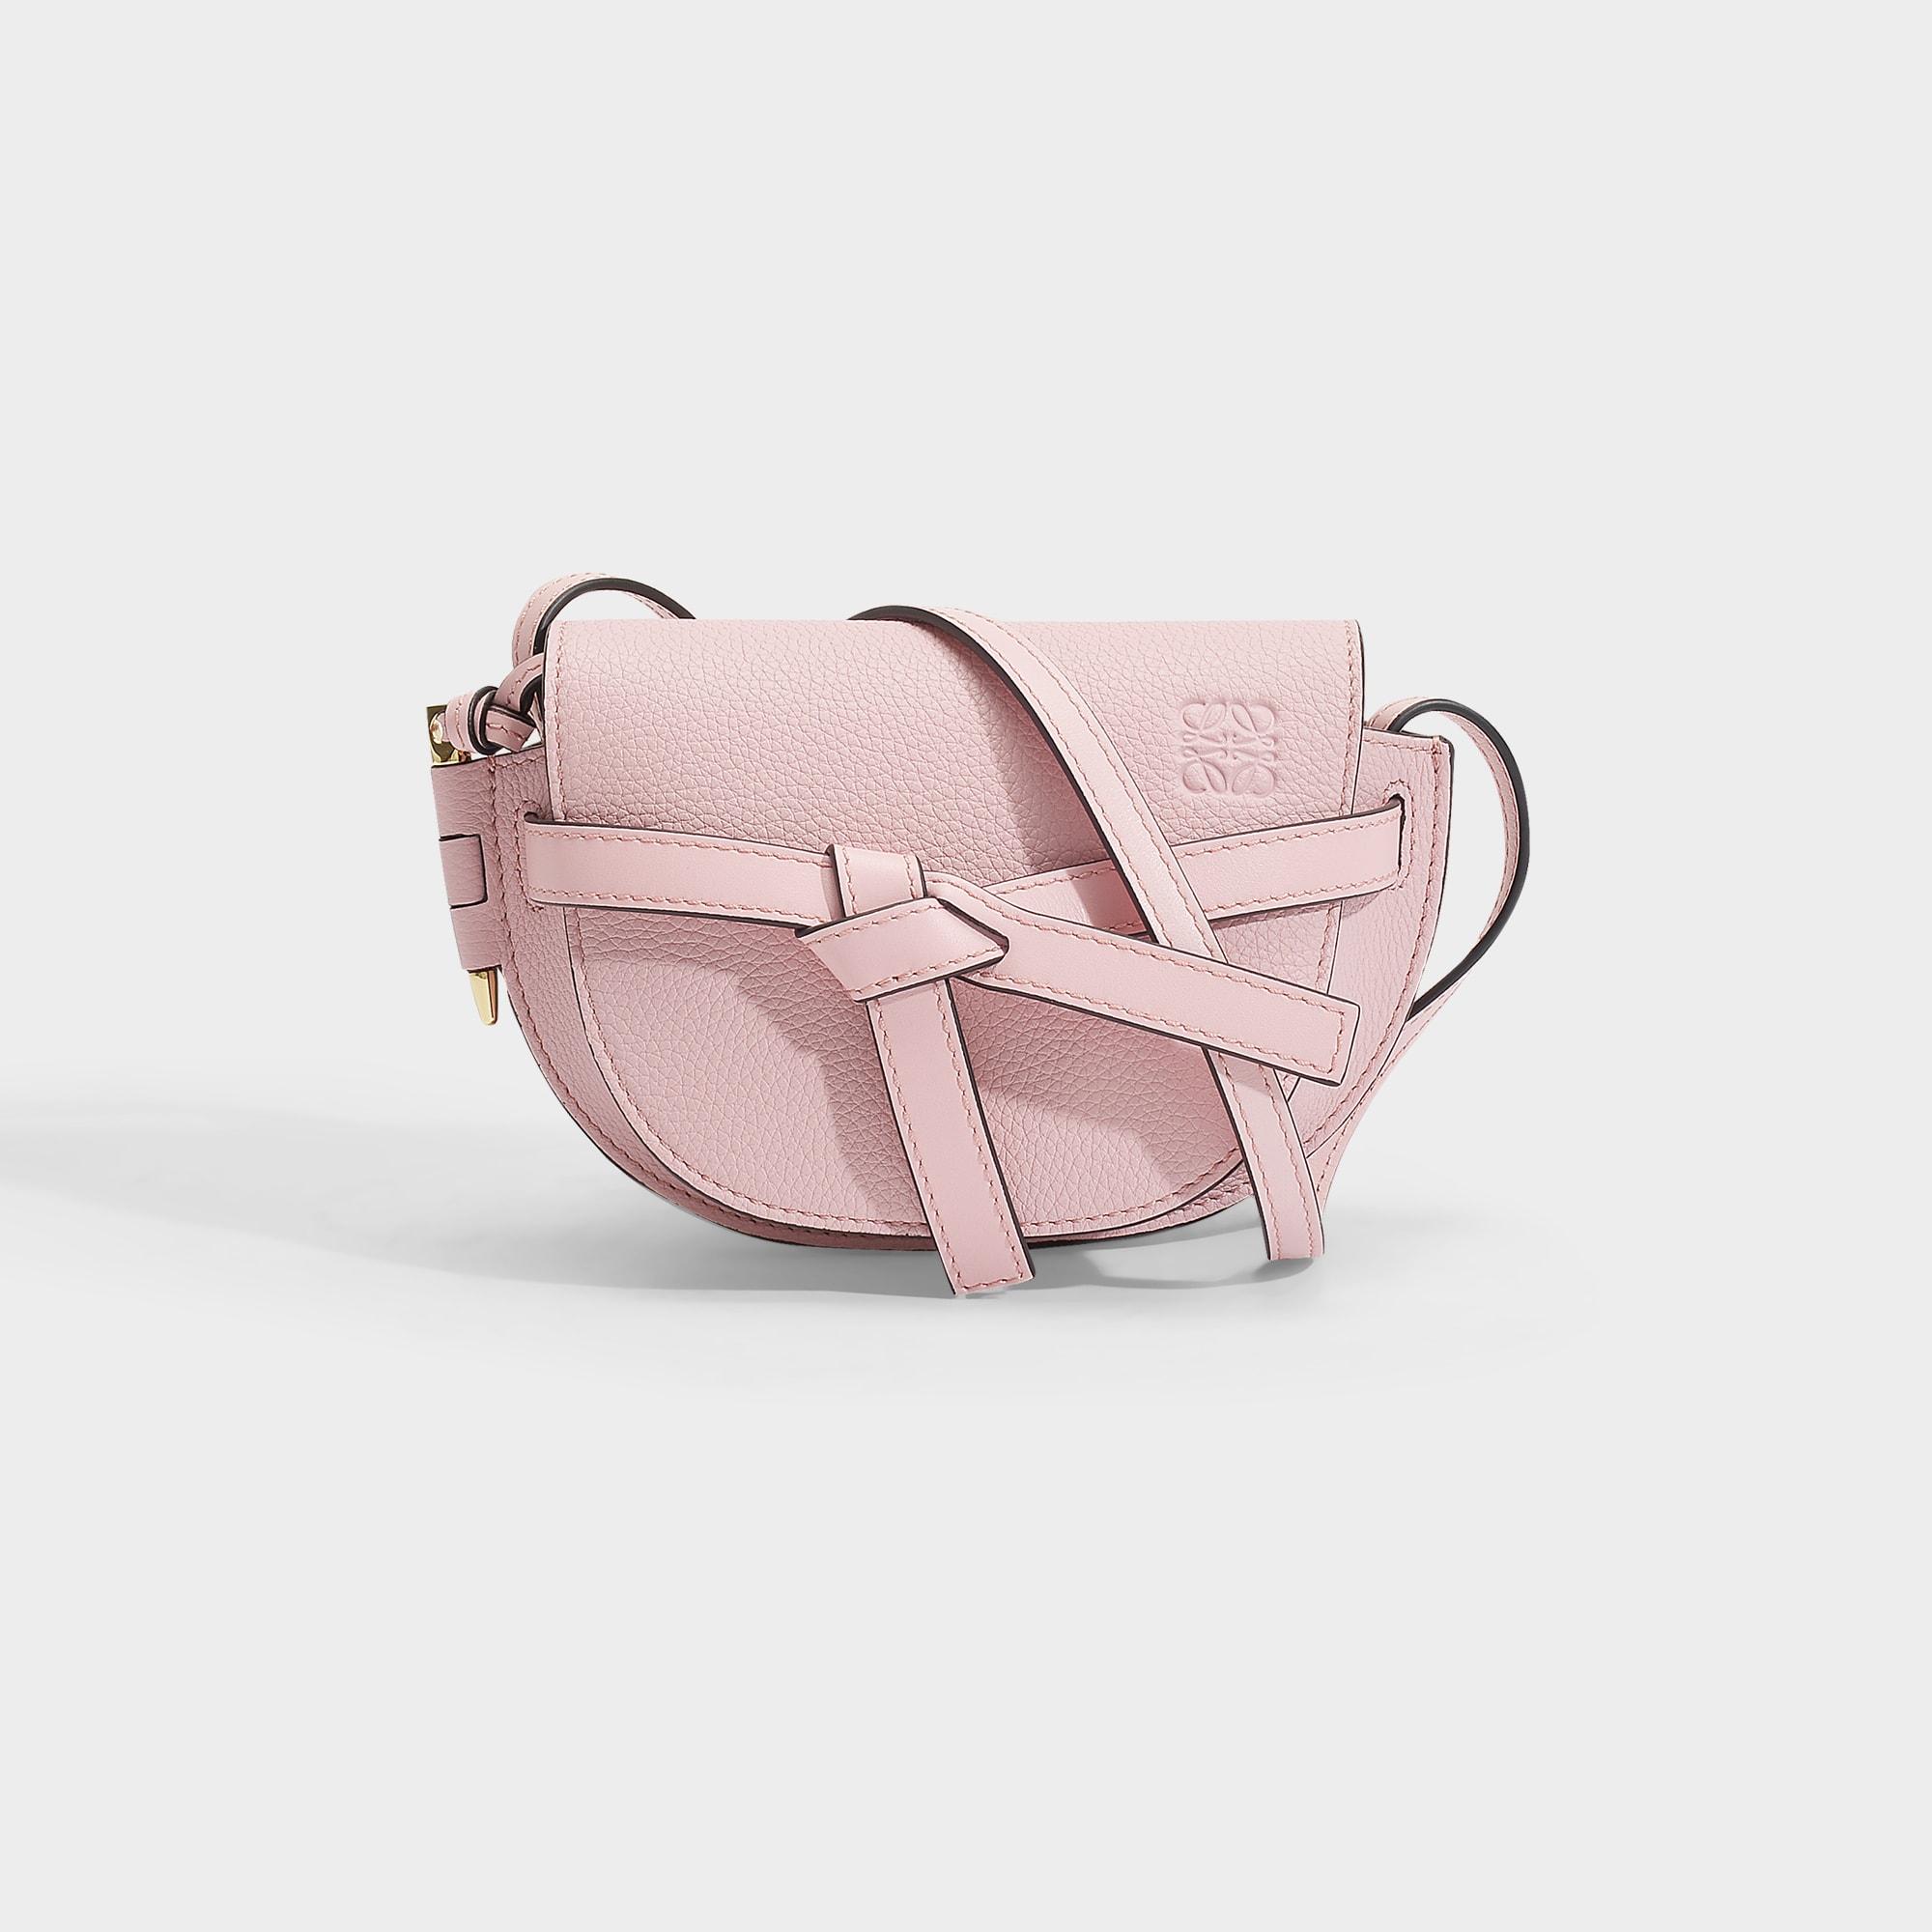 Loewe Mini Gate Bag in Pastel Pink (Pink) - Save 5% - Lyst